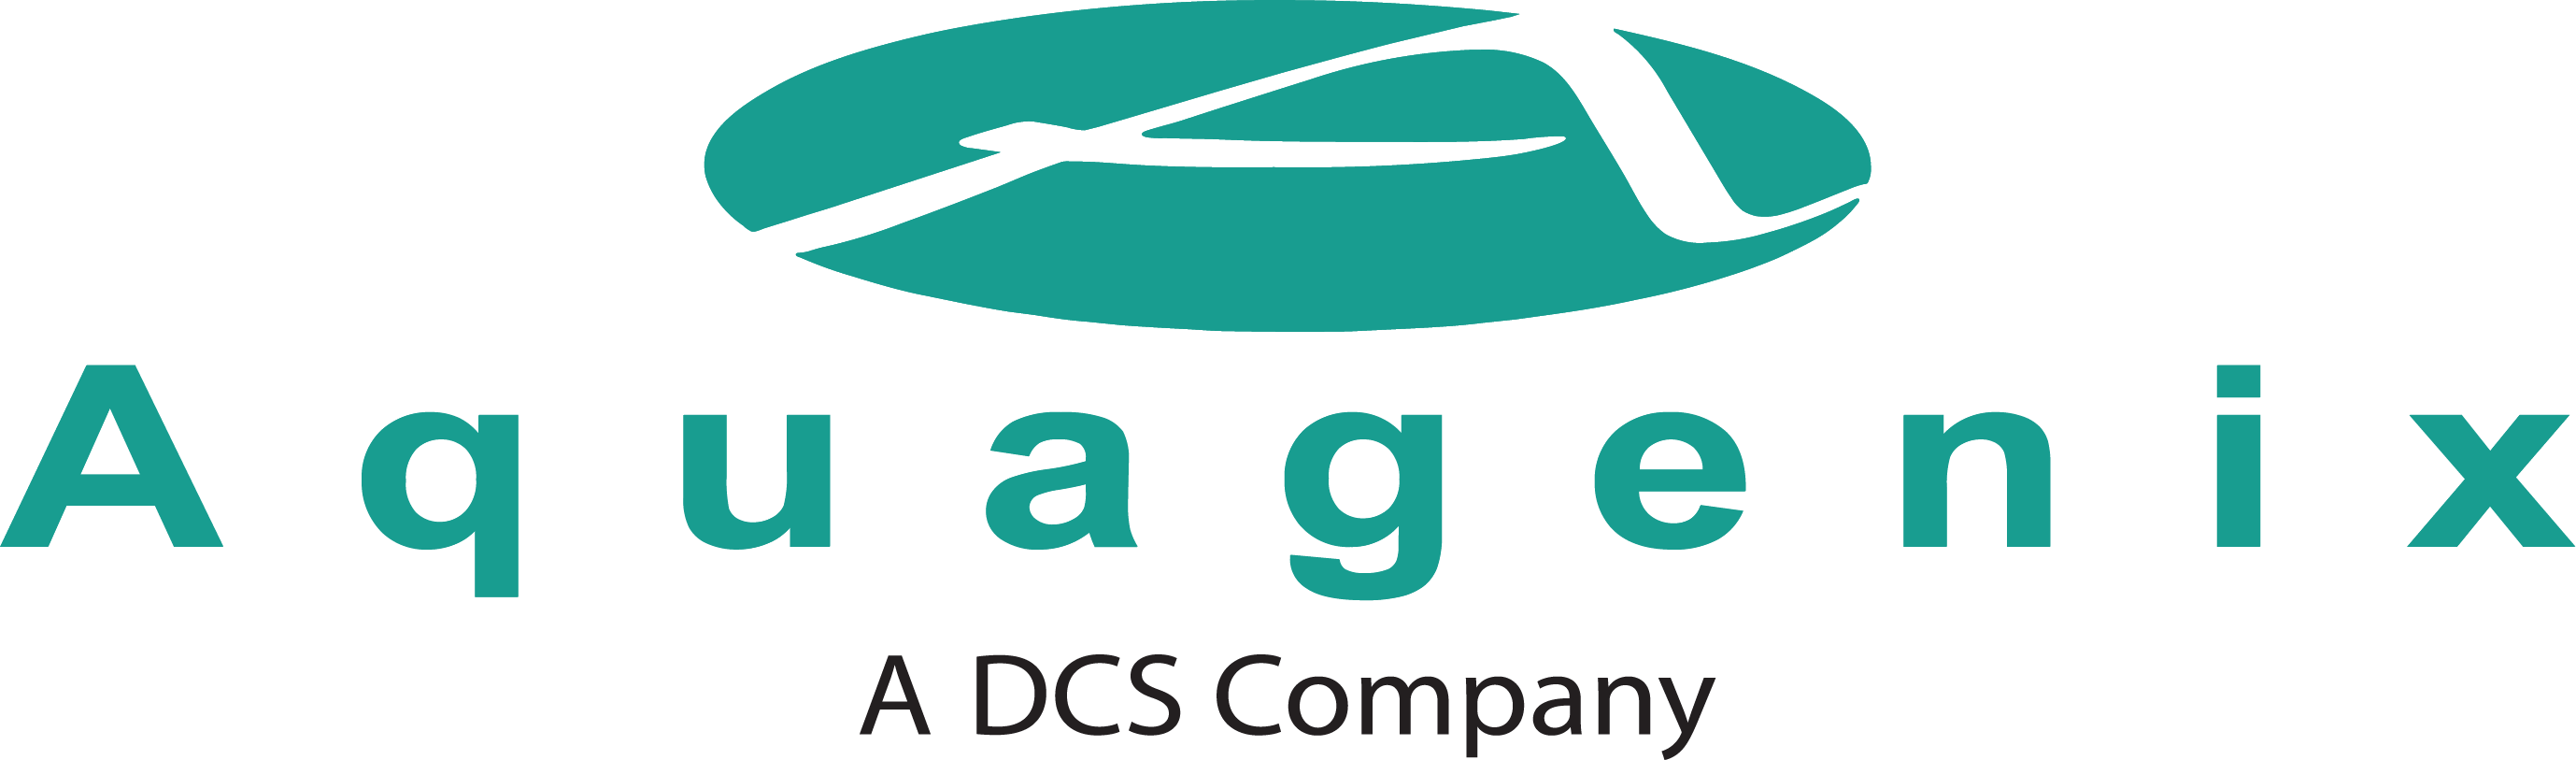 Teal and dark blue logo for Aquagenix